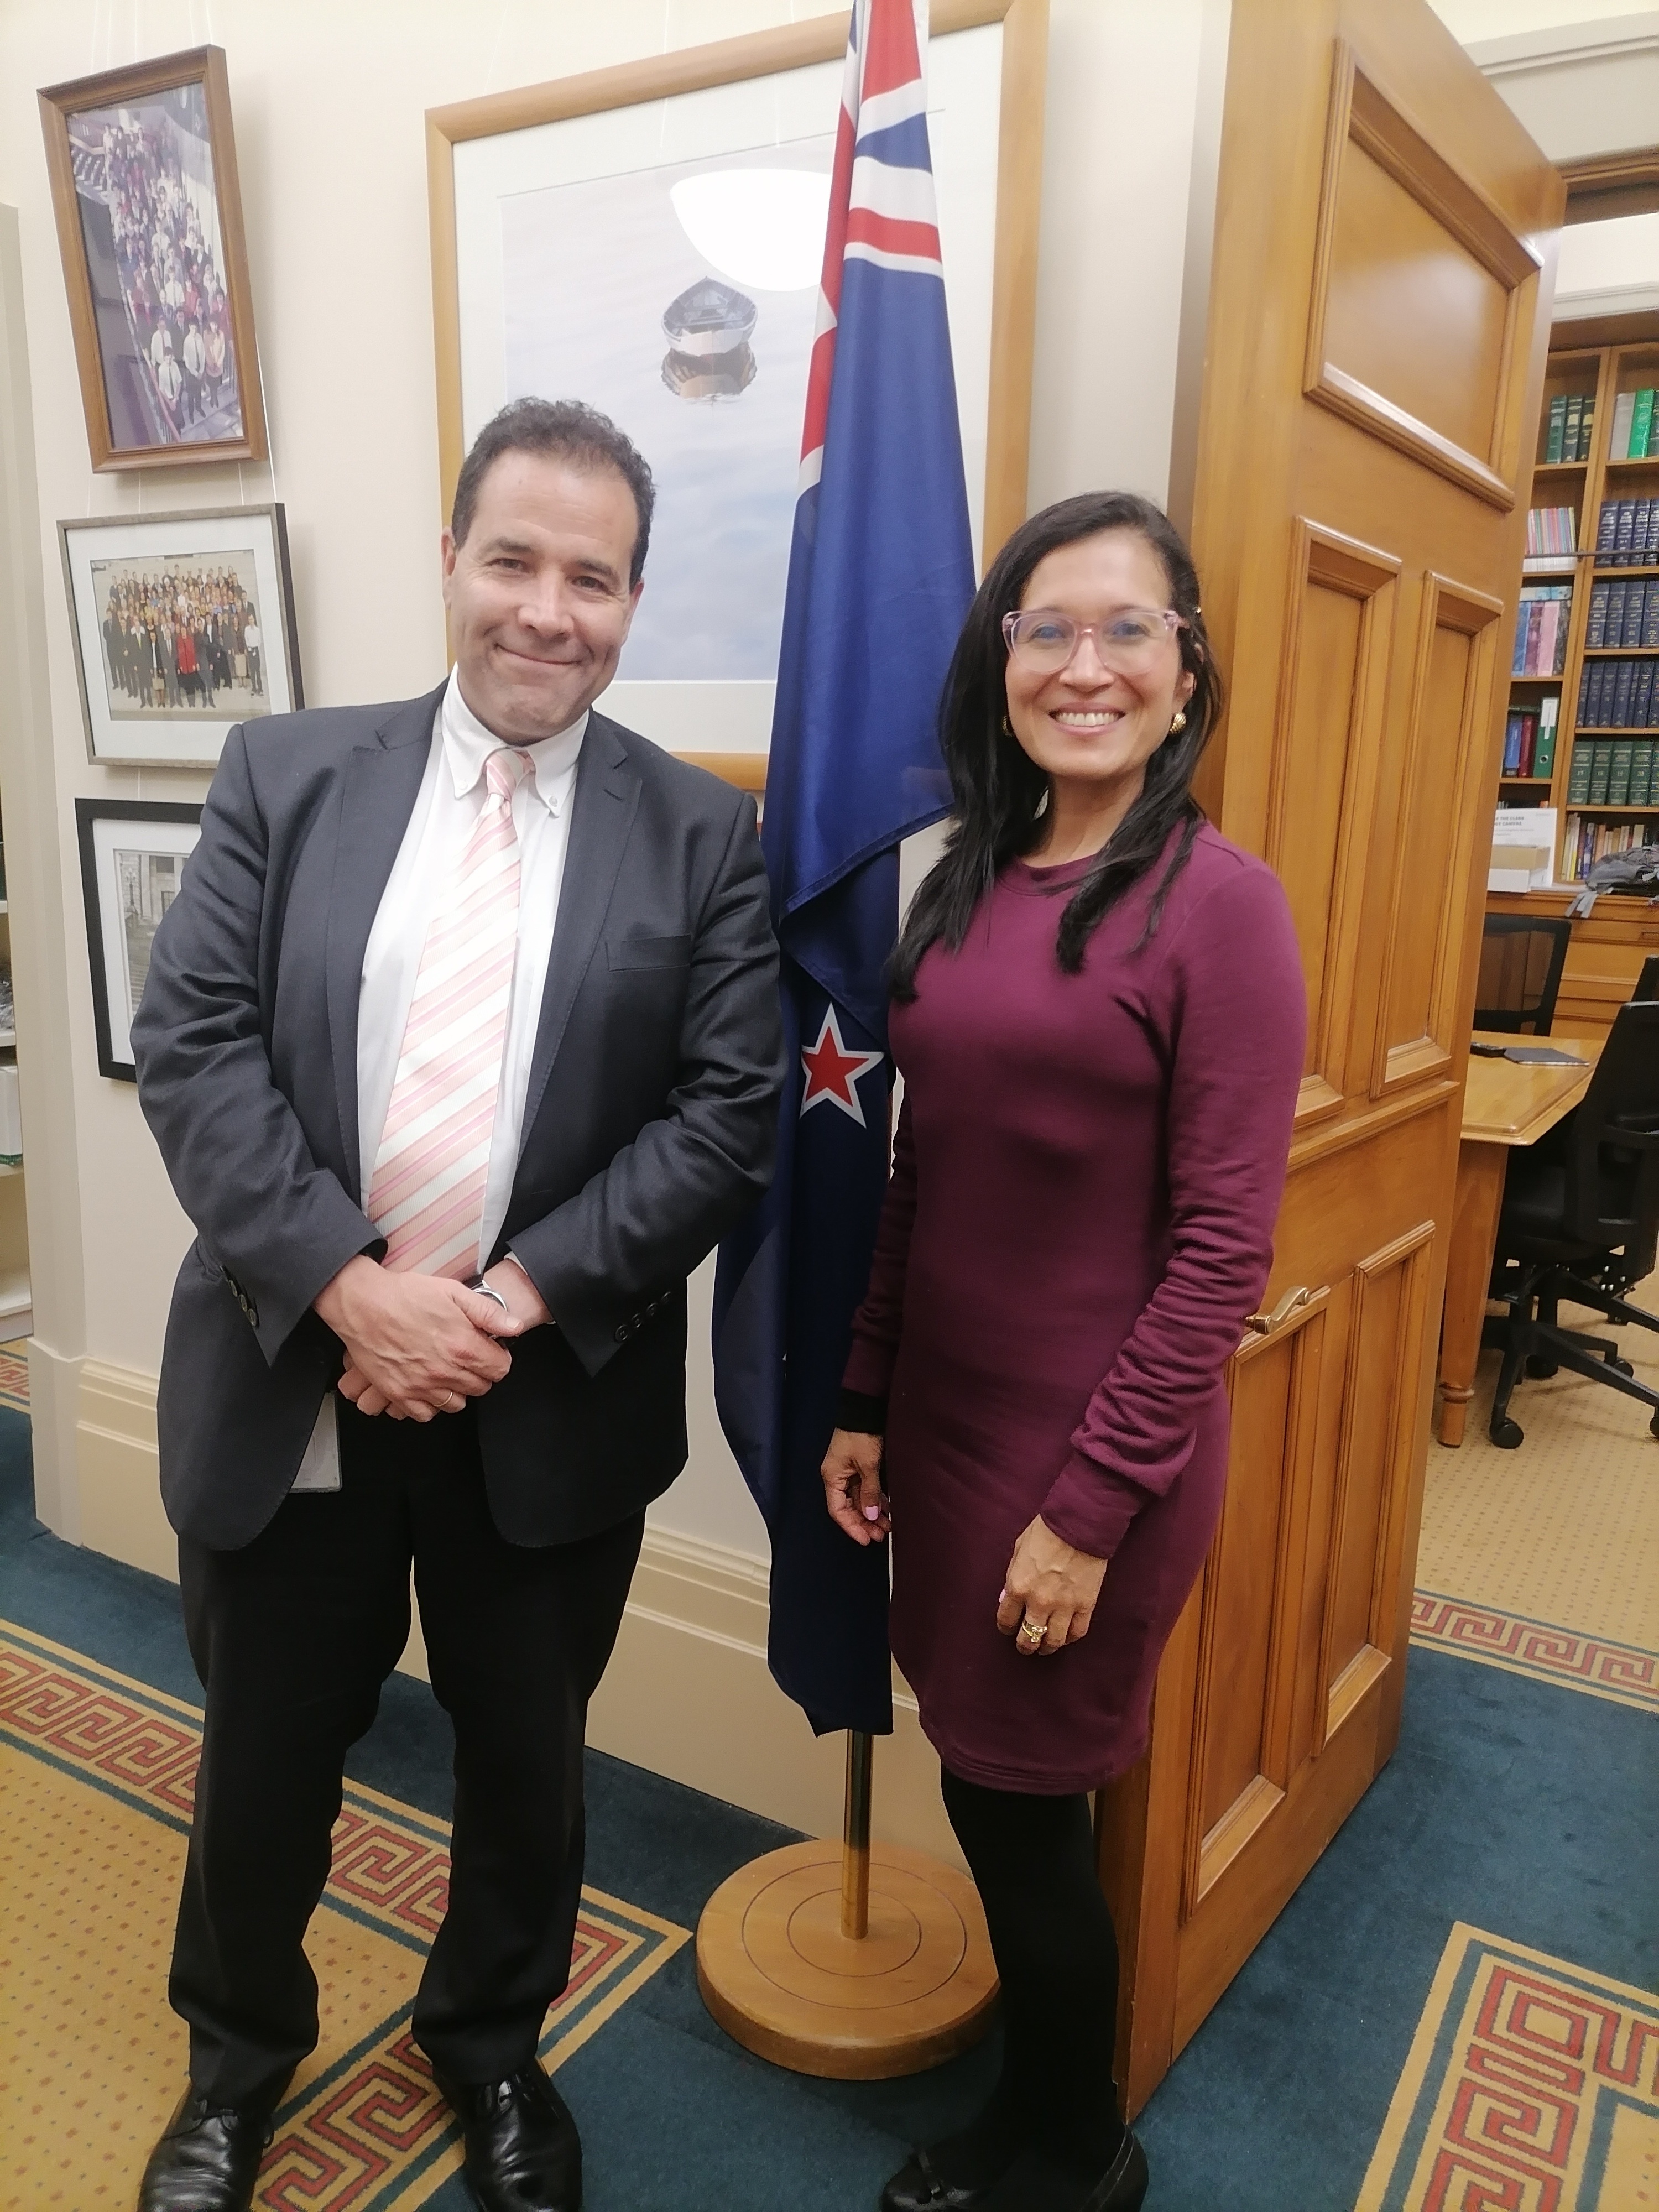 Cónsul de Colombia llevó a cabo visita a Wellington